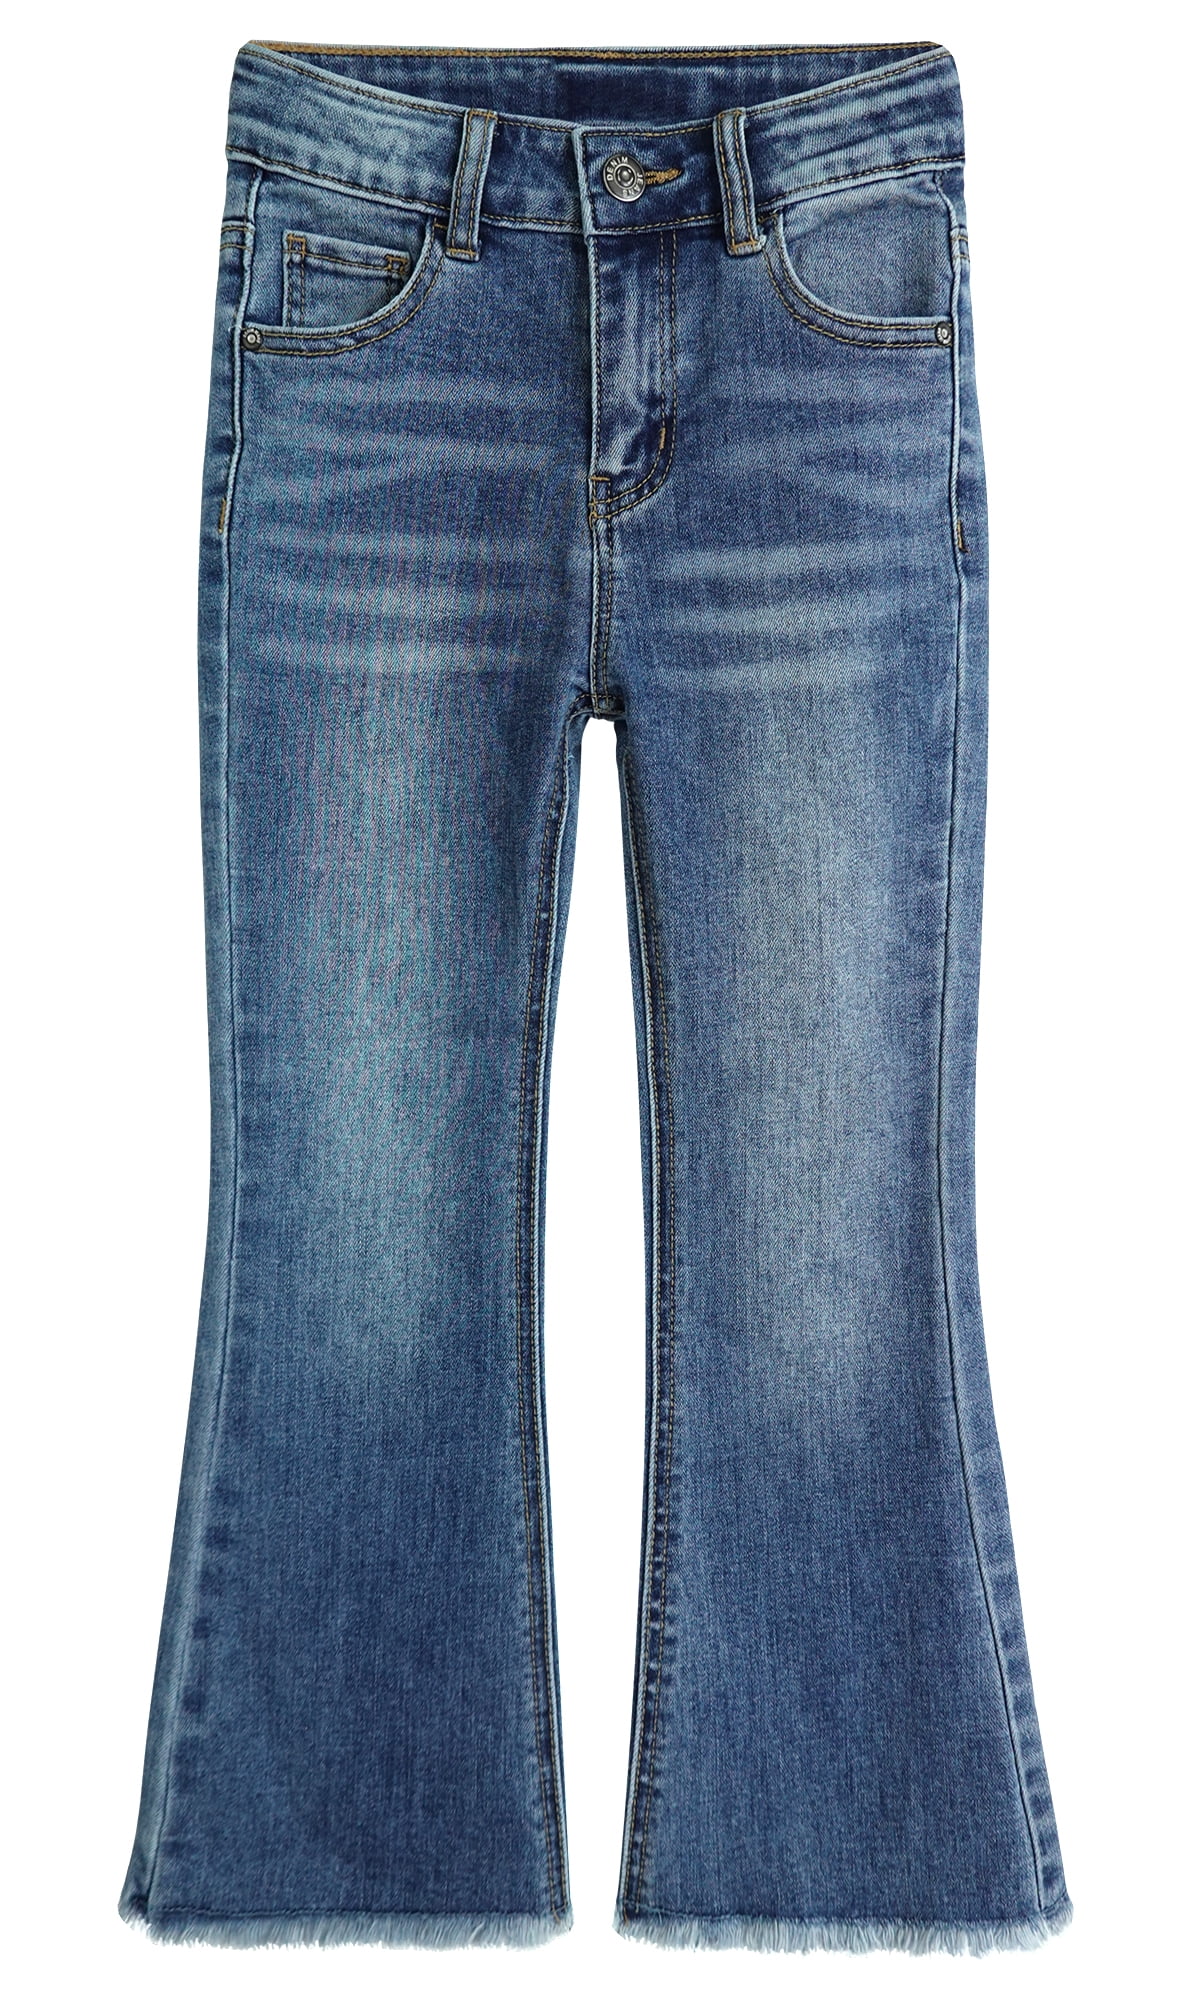 Denim Jeans, Inside 12-13 Split Ral Edges High Elastic Wide-leg Hem Waistband Girls Stretch KIDSCOOL Years SPACE Pants,Black, with